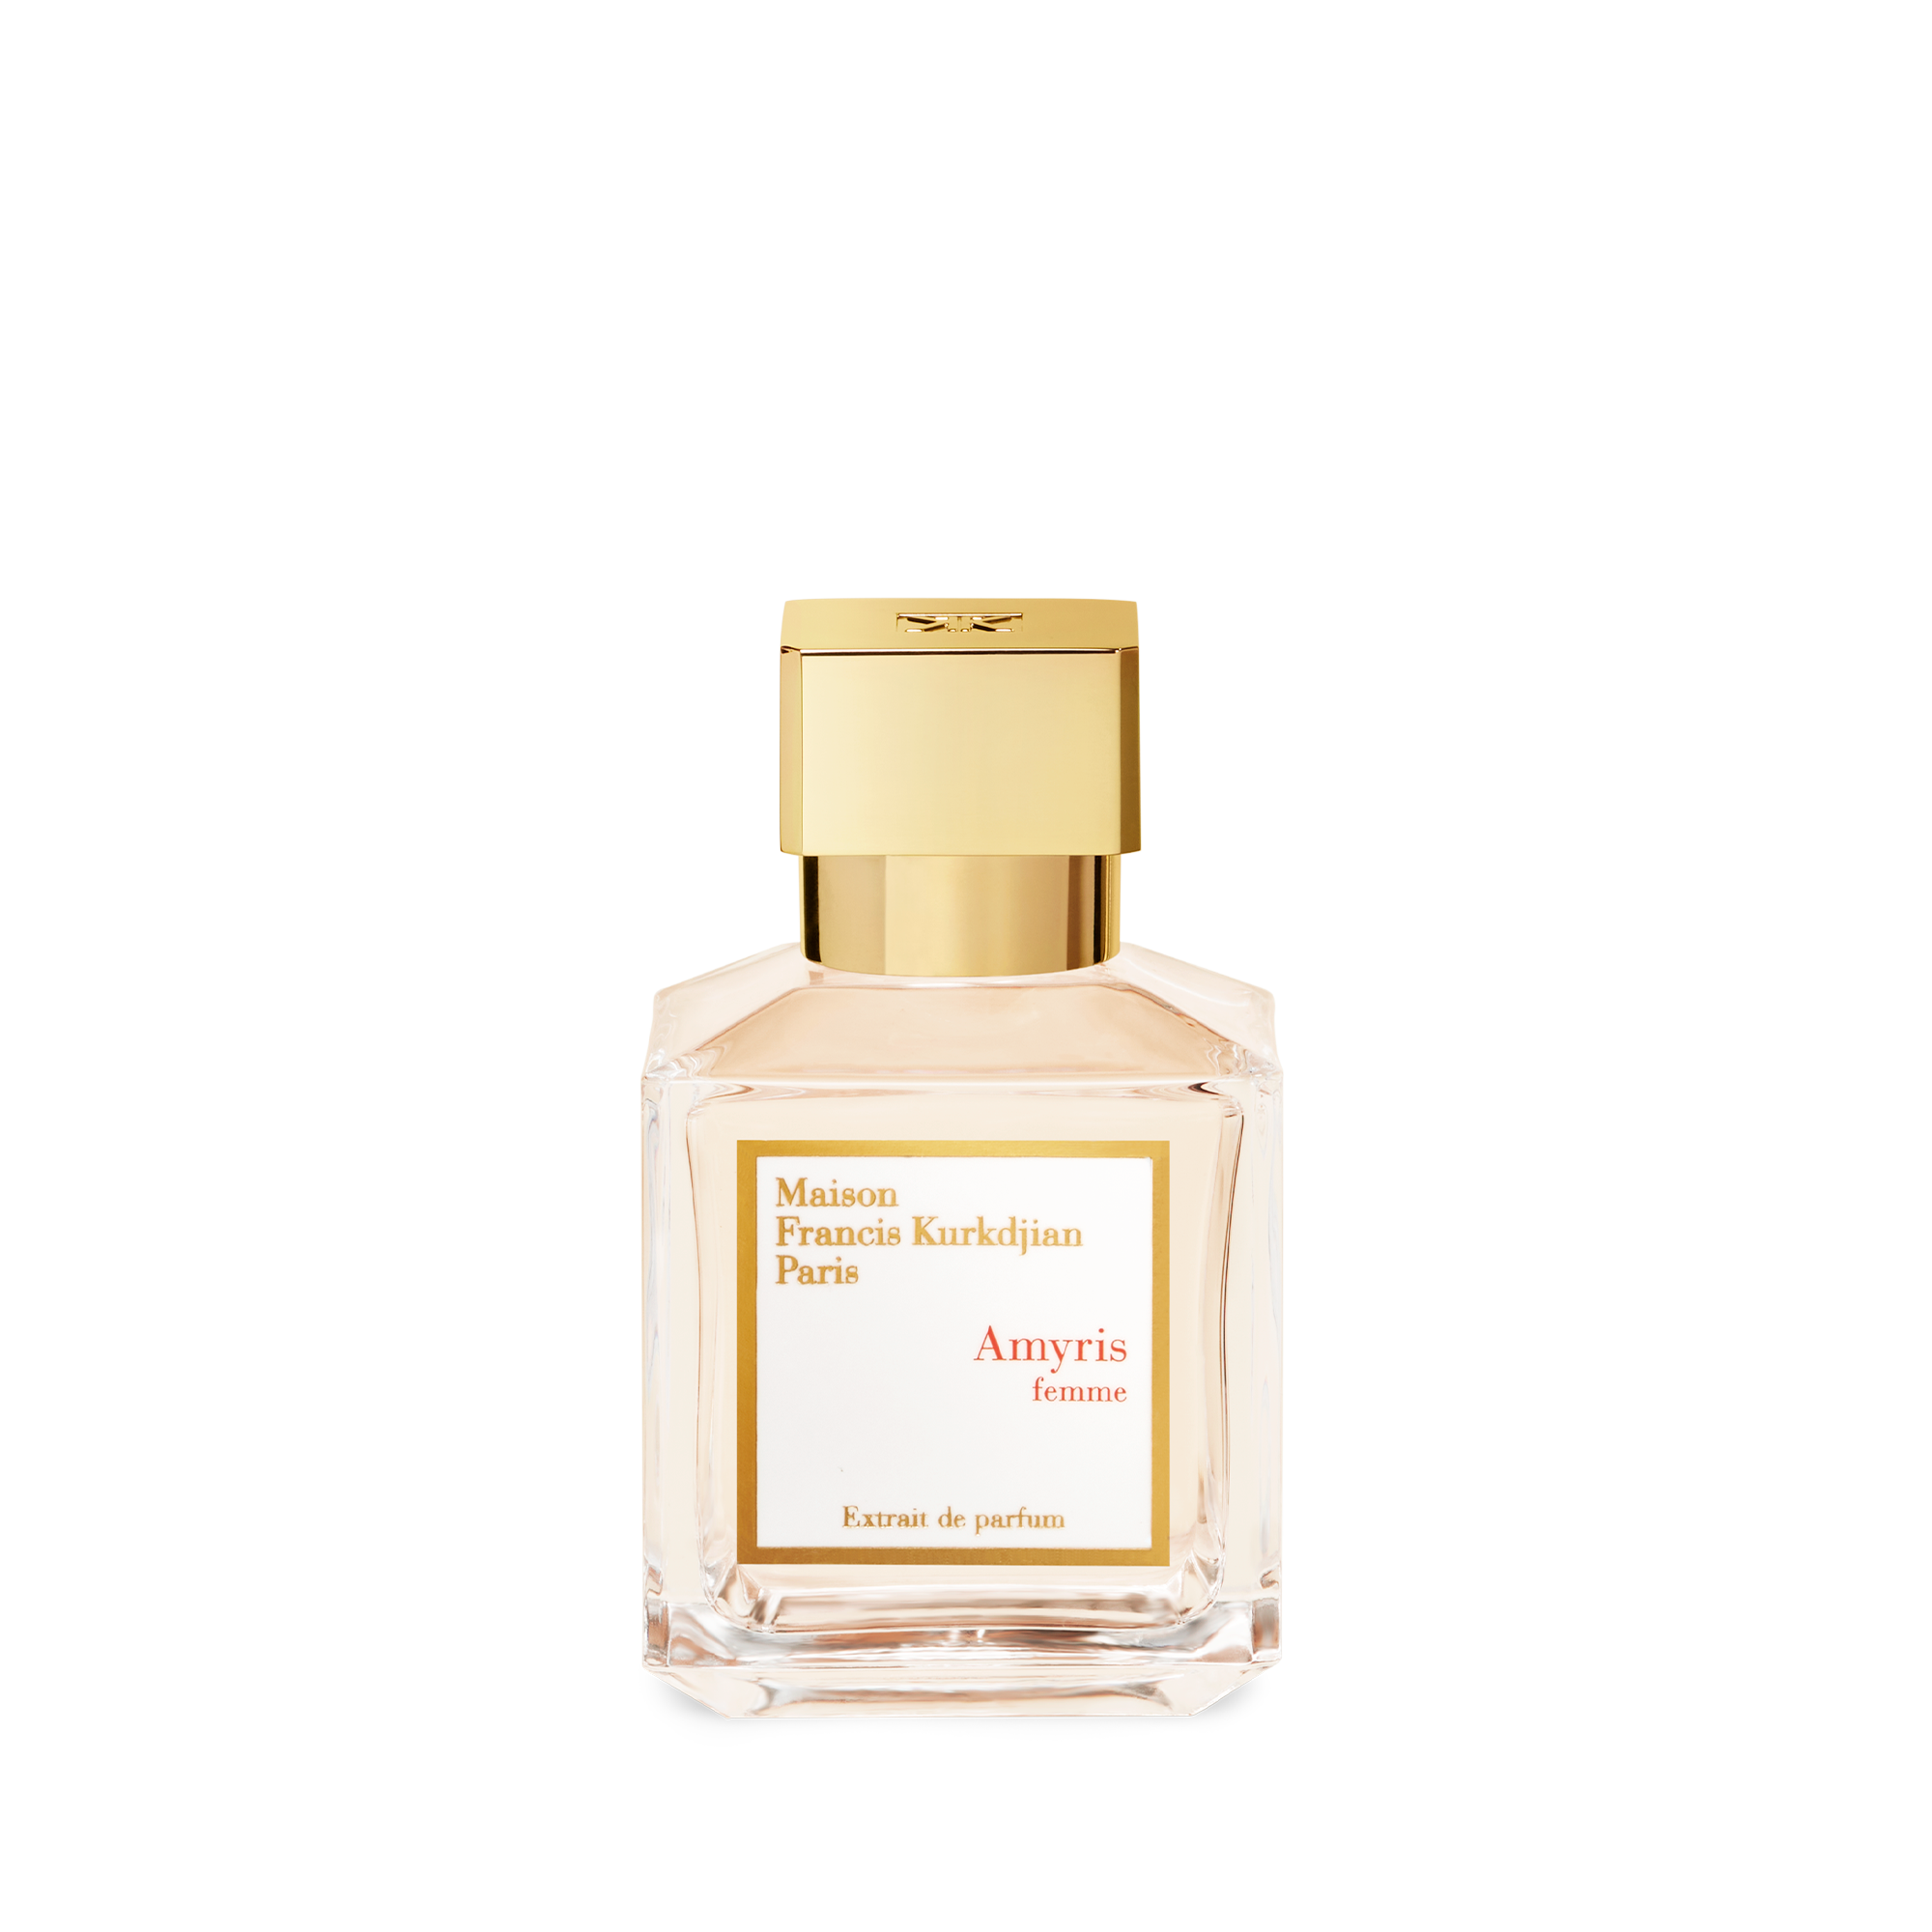 Maison Francis Kurkdjian Amyris Femme Eau de parfum - 70ml